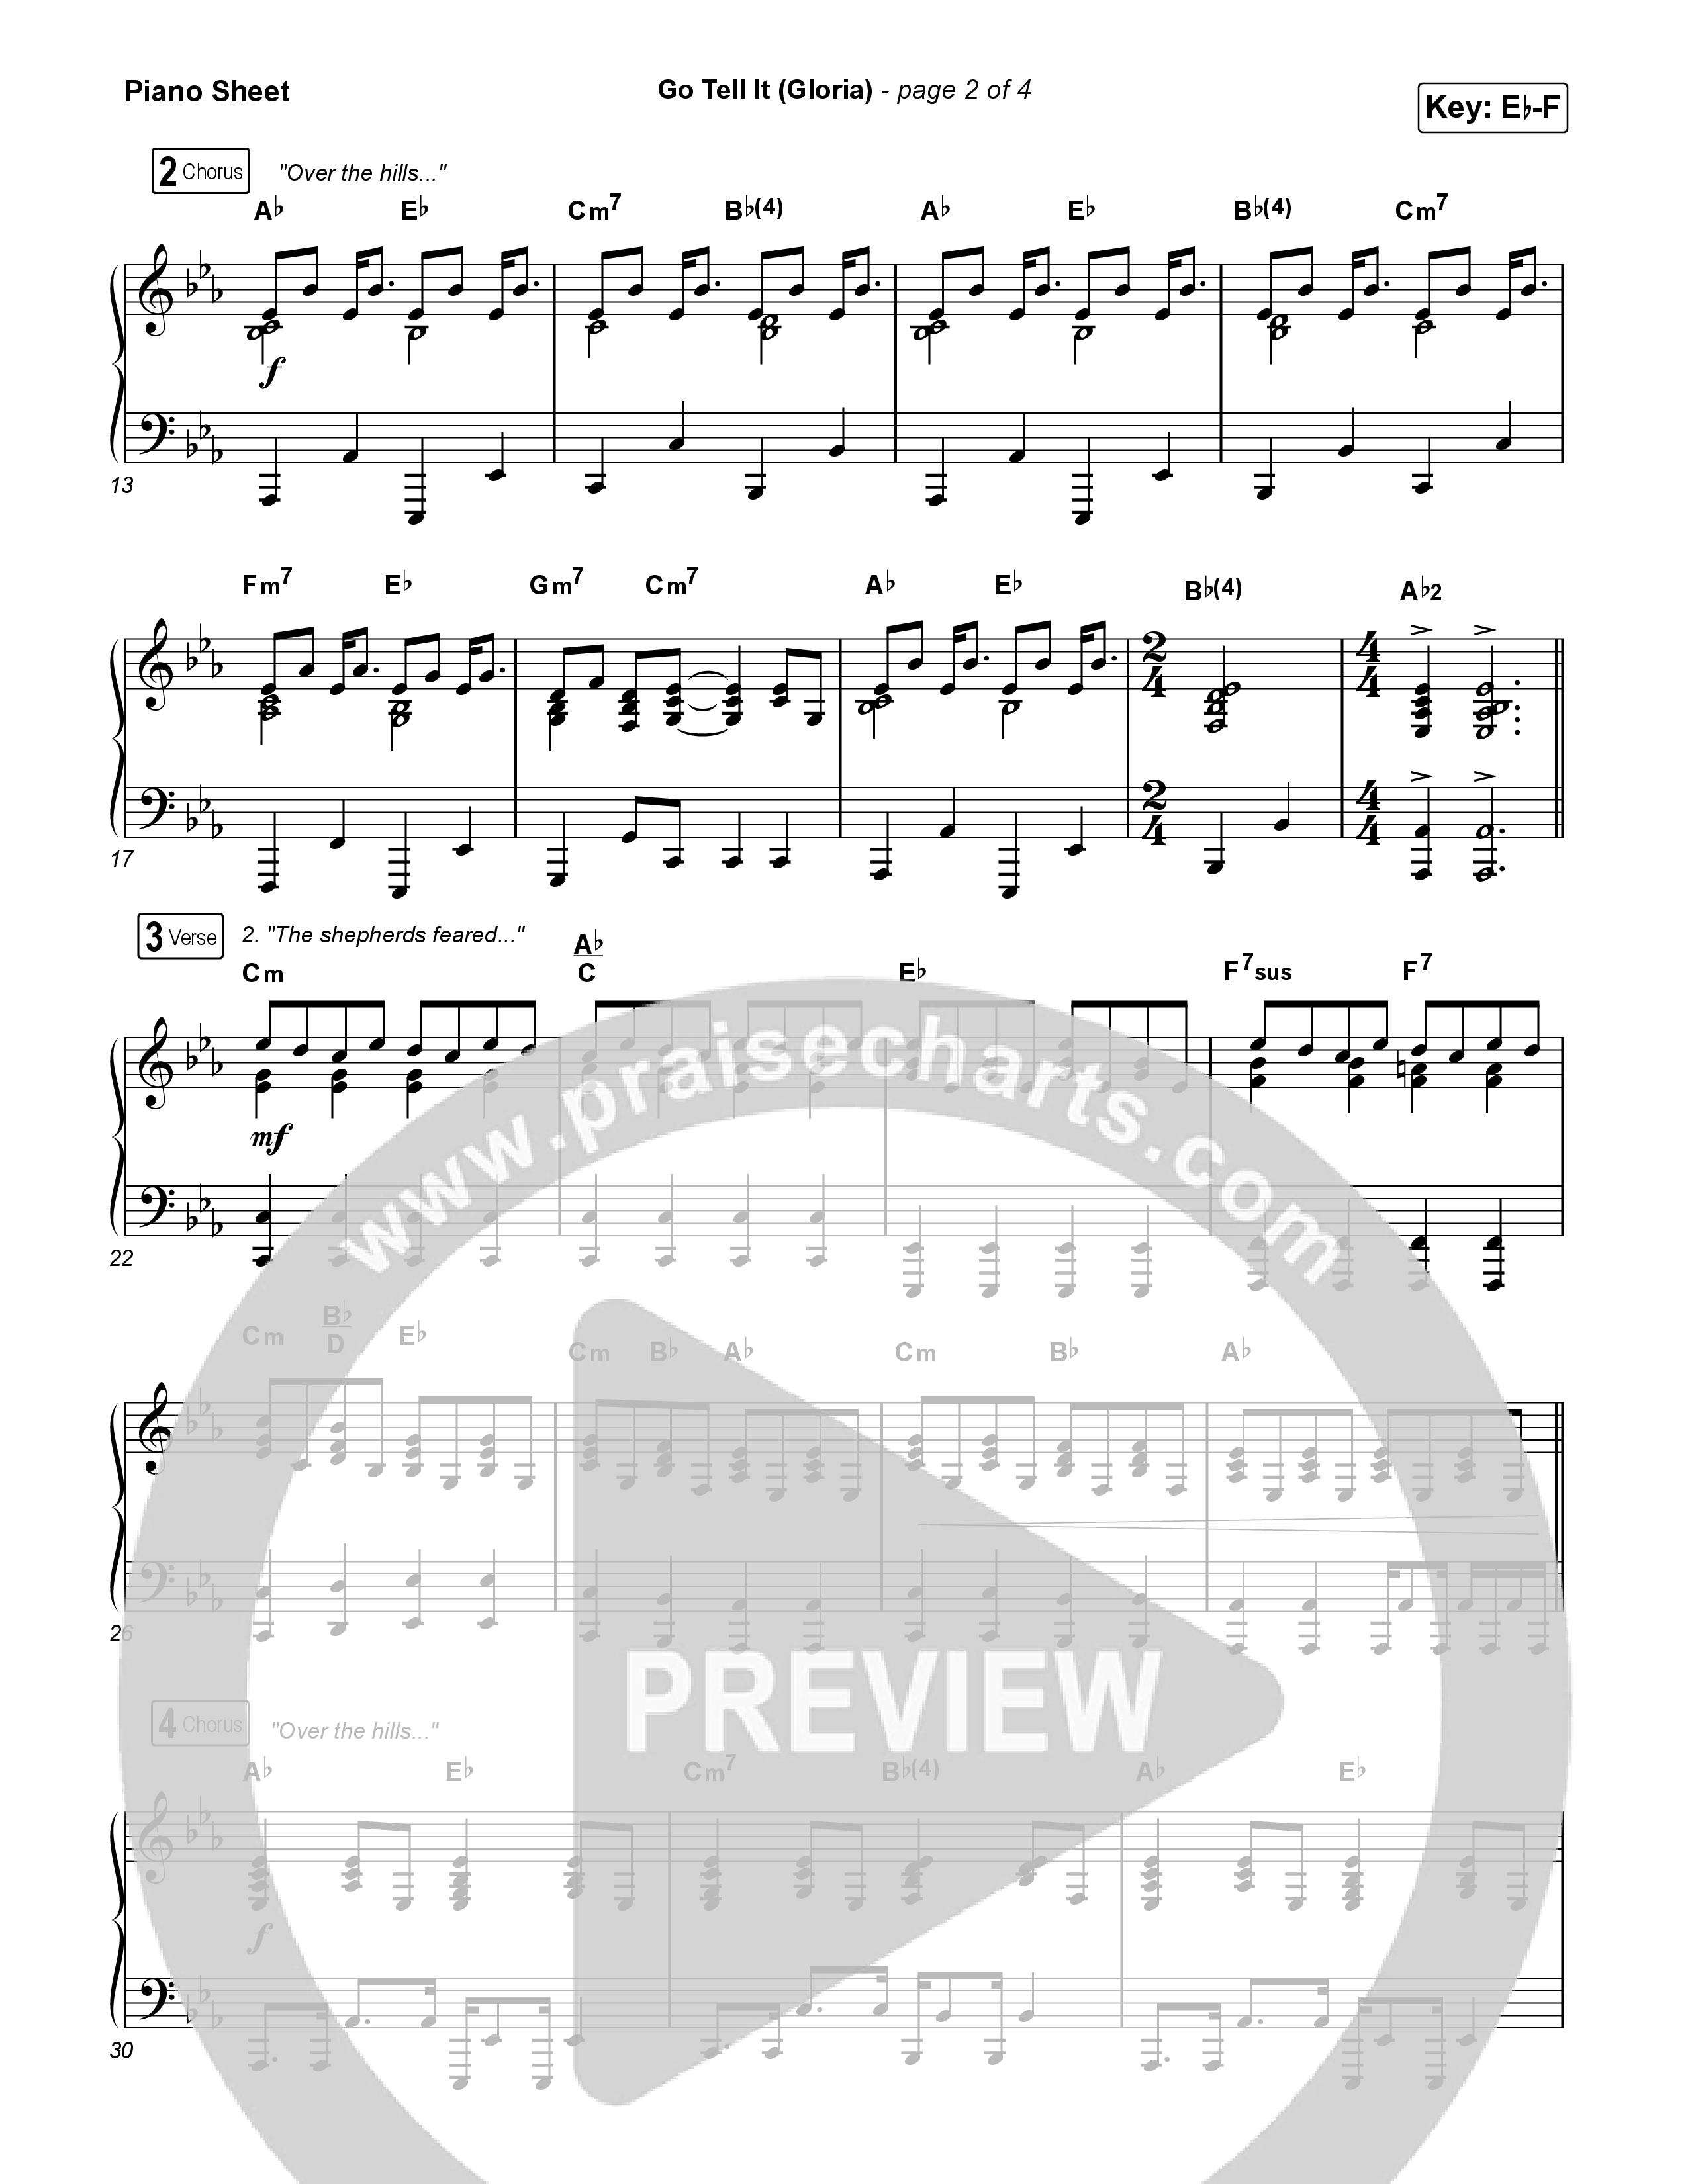 Go Tell It (Gloria) (Sing It Now) Piano Sheet (Matt Maher / Arr. Luke Gambill)